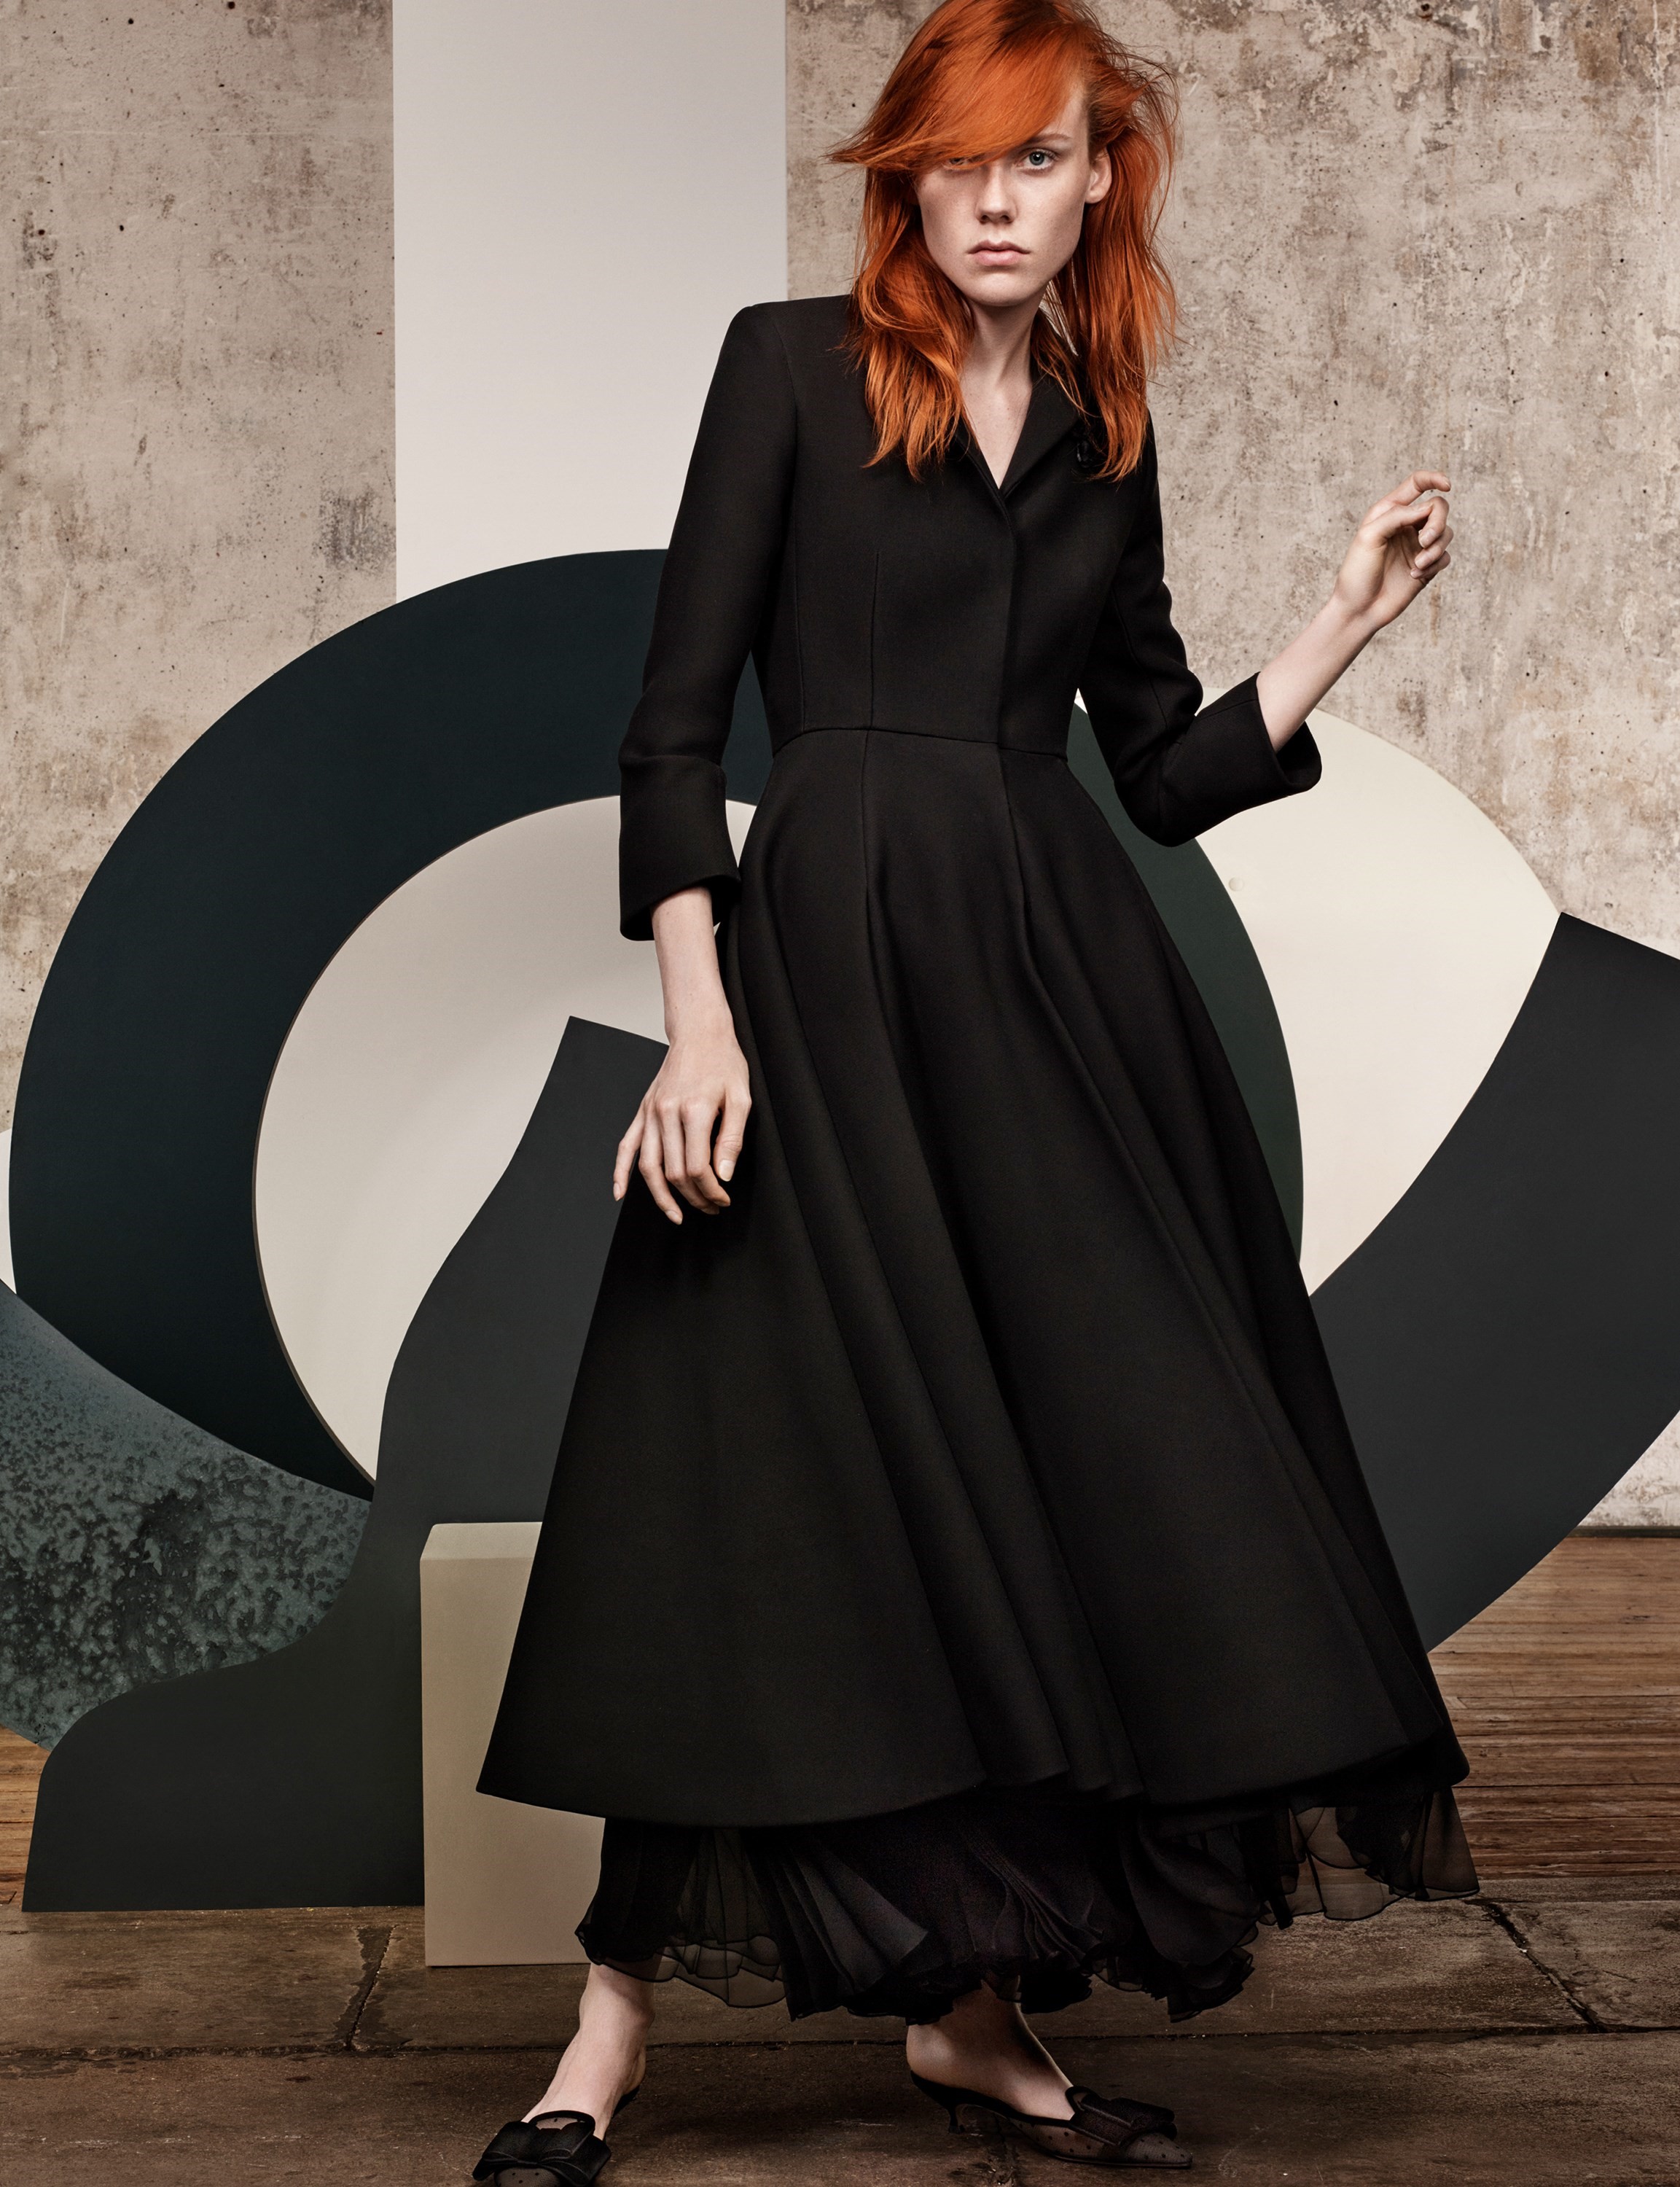 “We Need to Speak About Women”: Maria Grazia Chiuri on Dior | AnOther